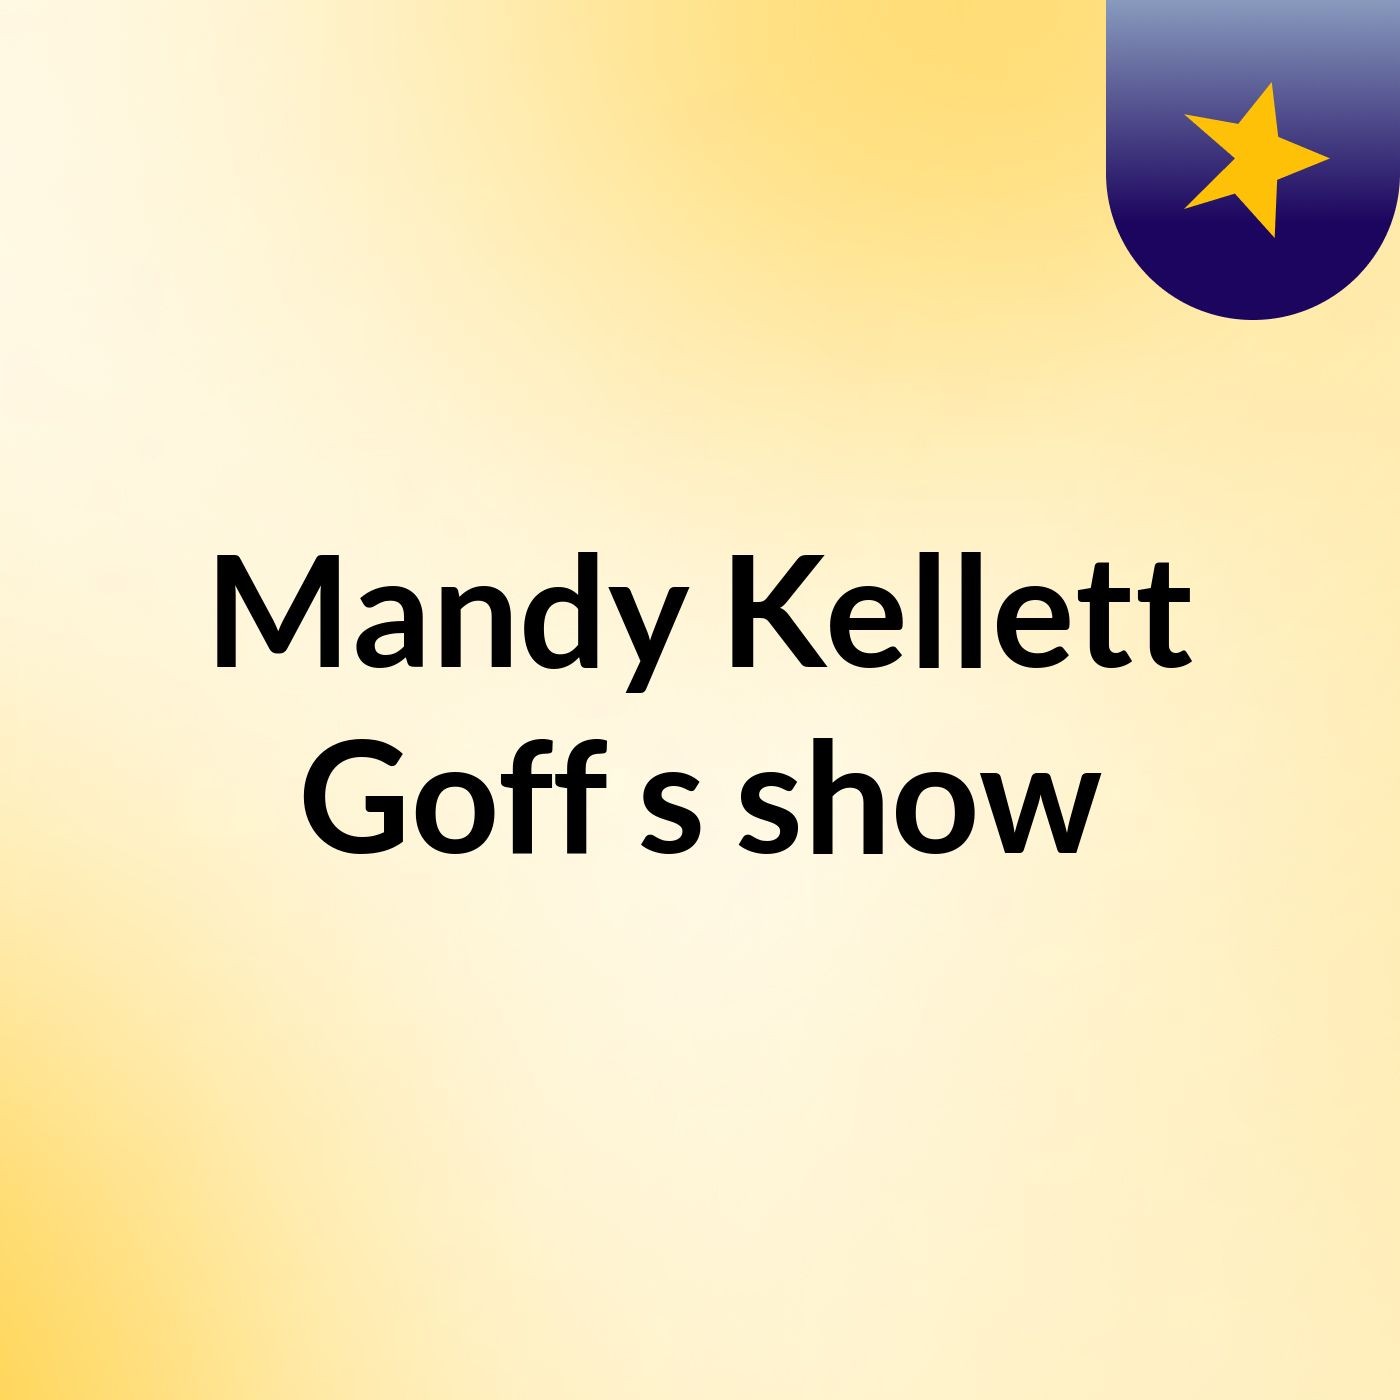 Episode 11 - Mandy Kellett Goff's show